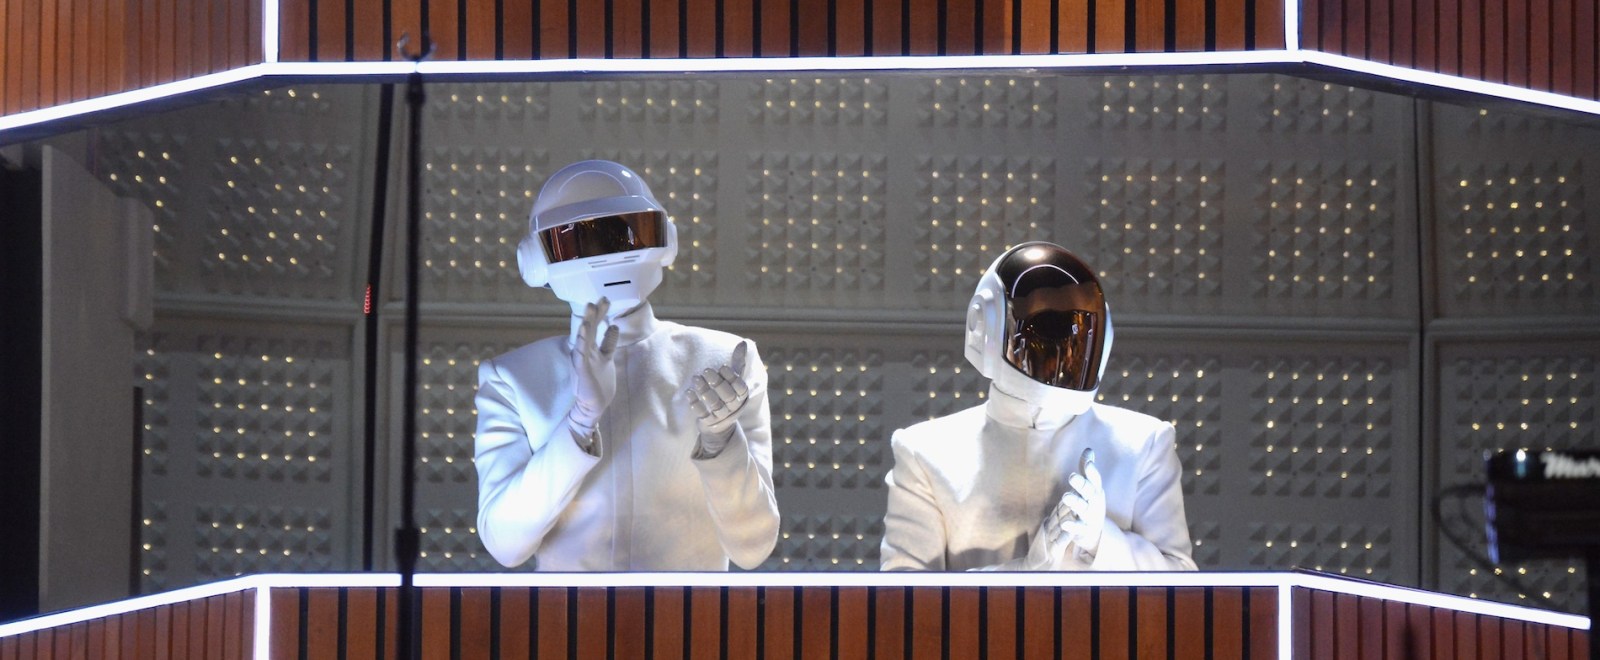 Daft Punk 56th Grammy Awards 2014